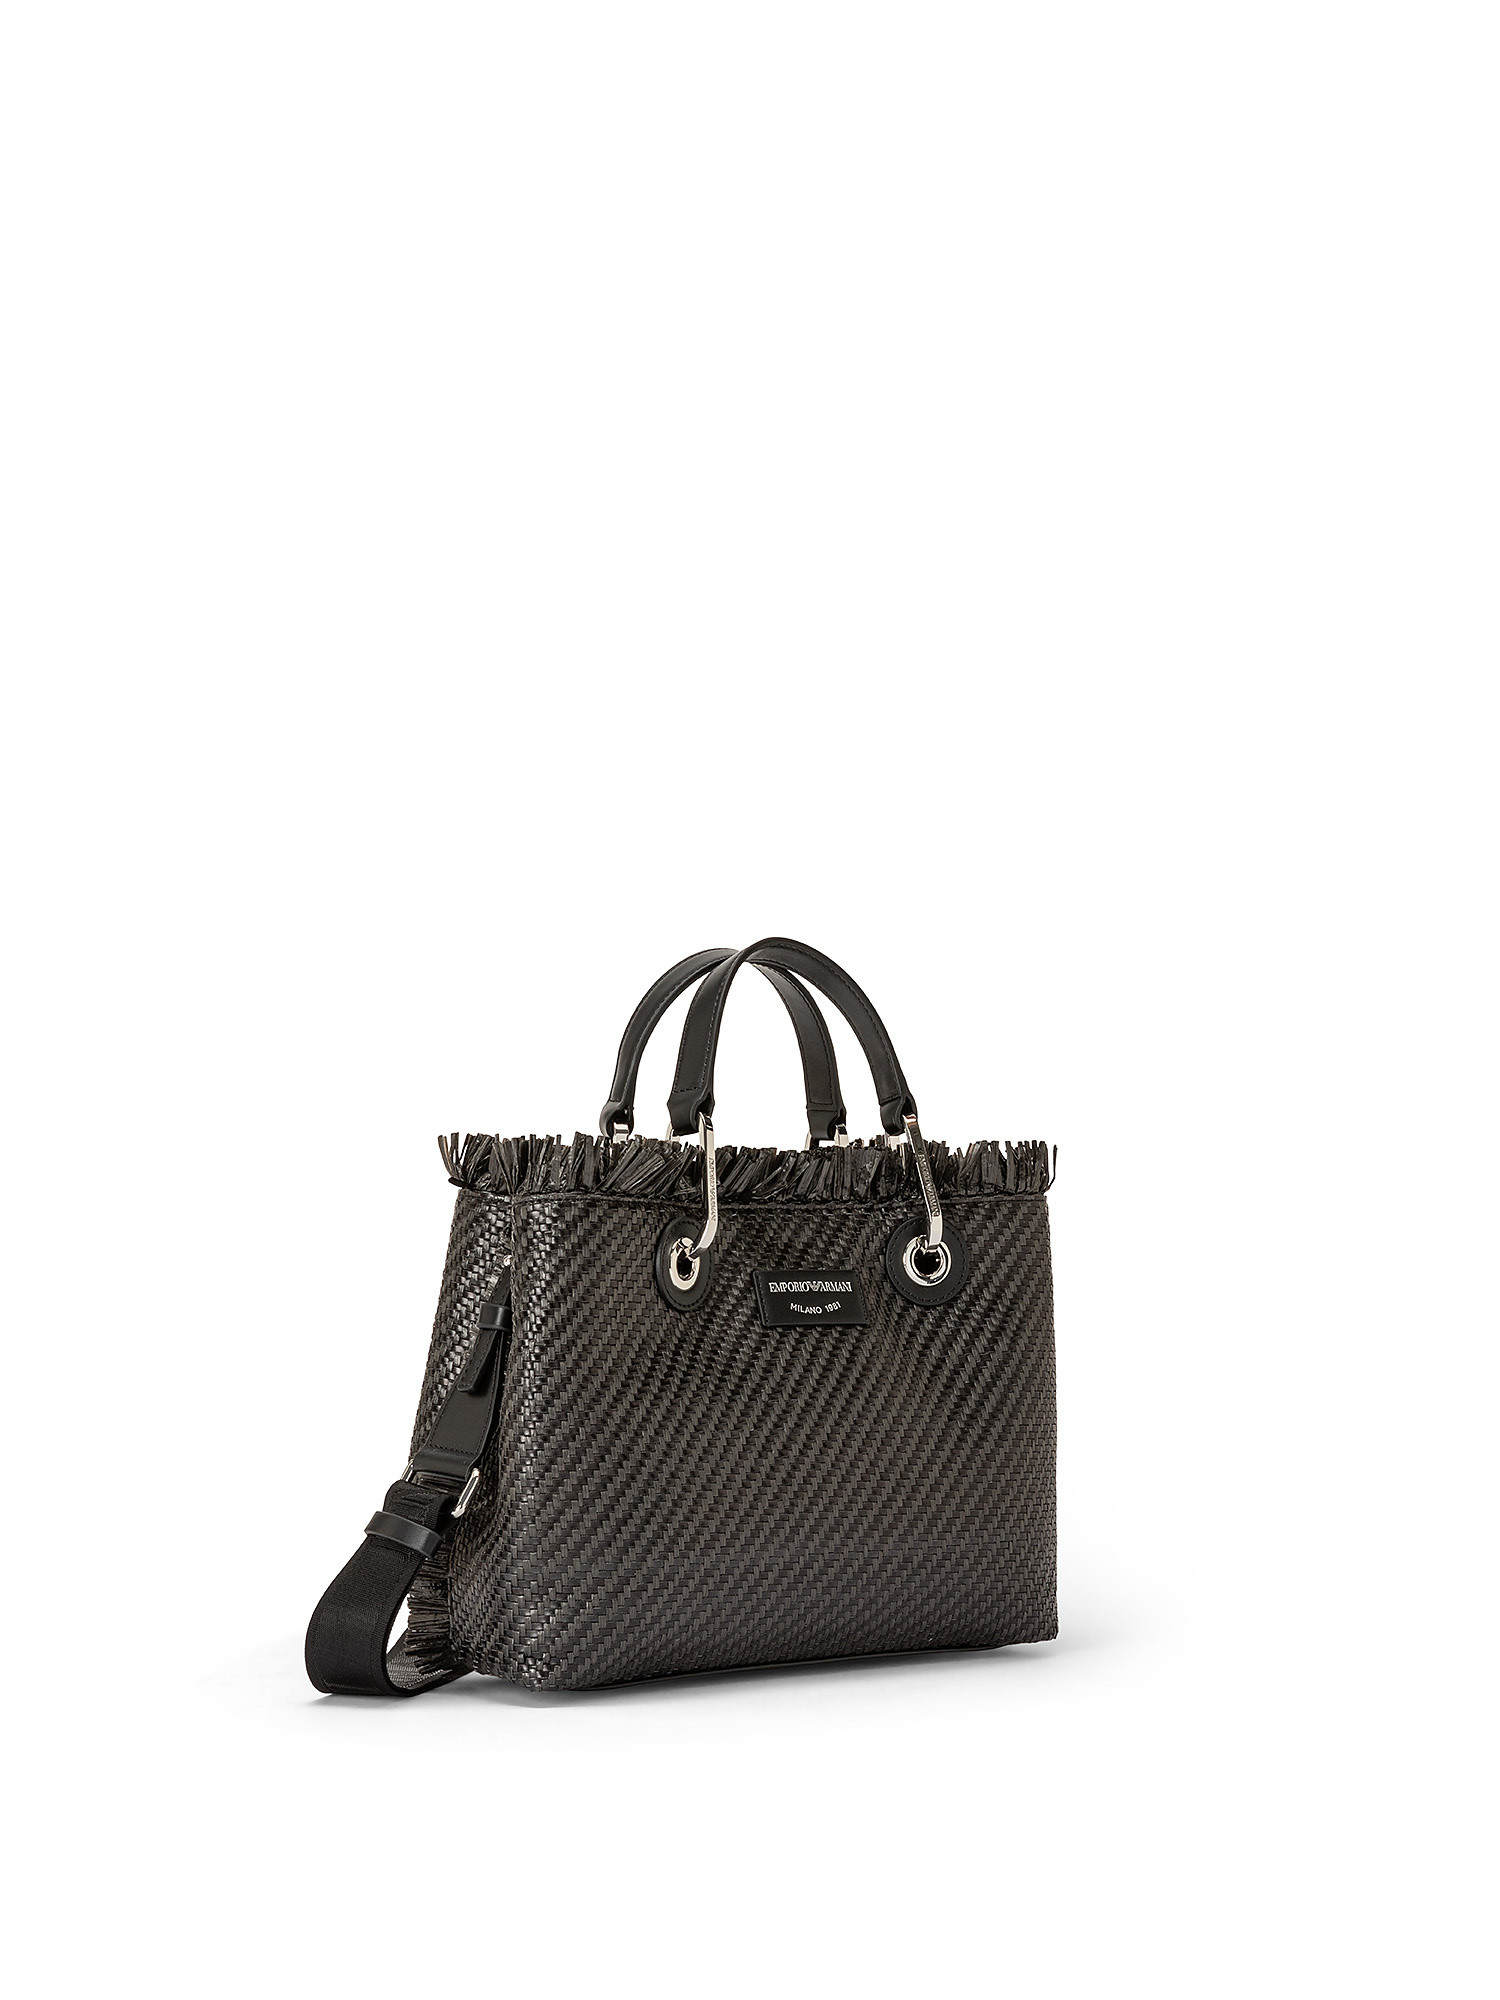 Shopping bag in paglia intrecciata, Black, large image number 1